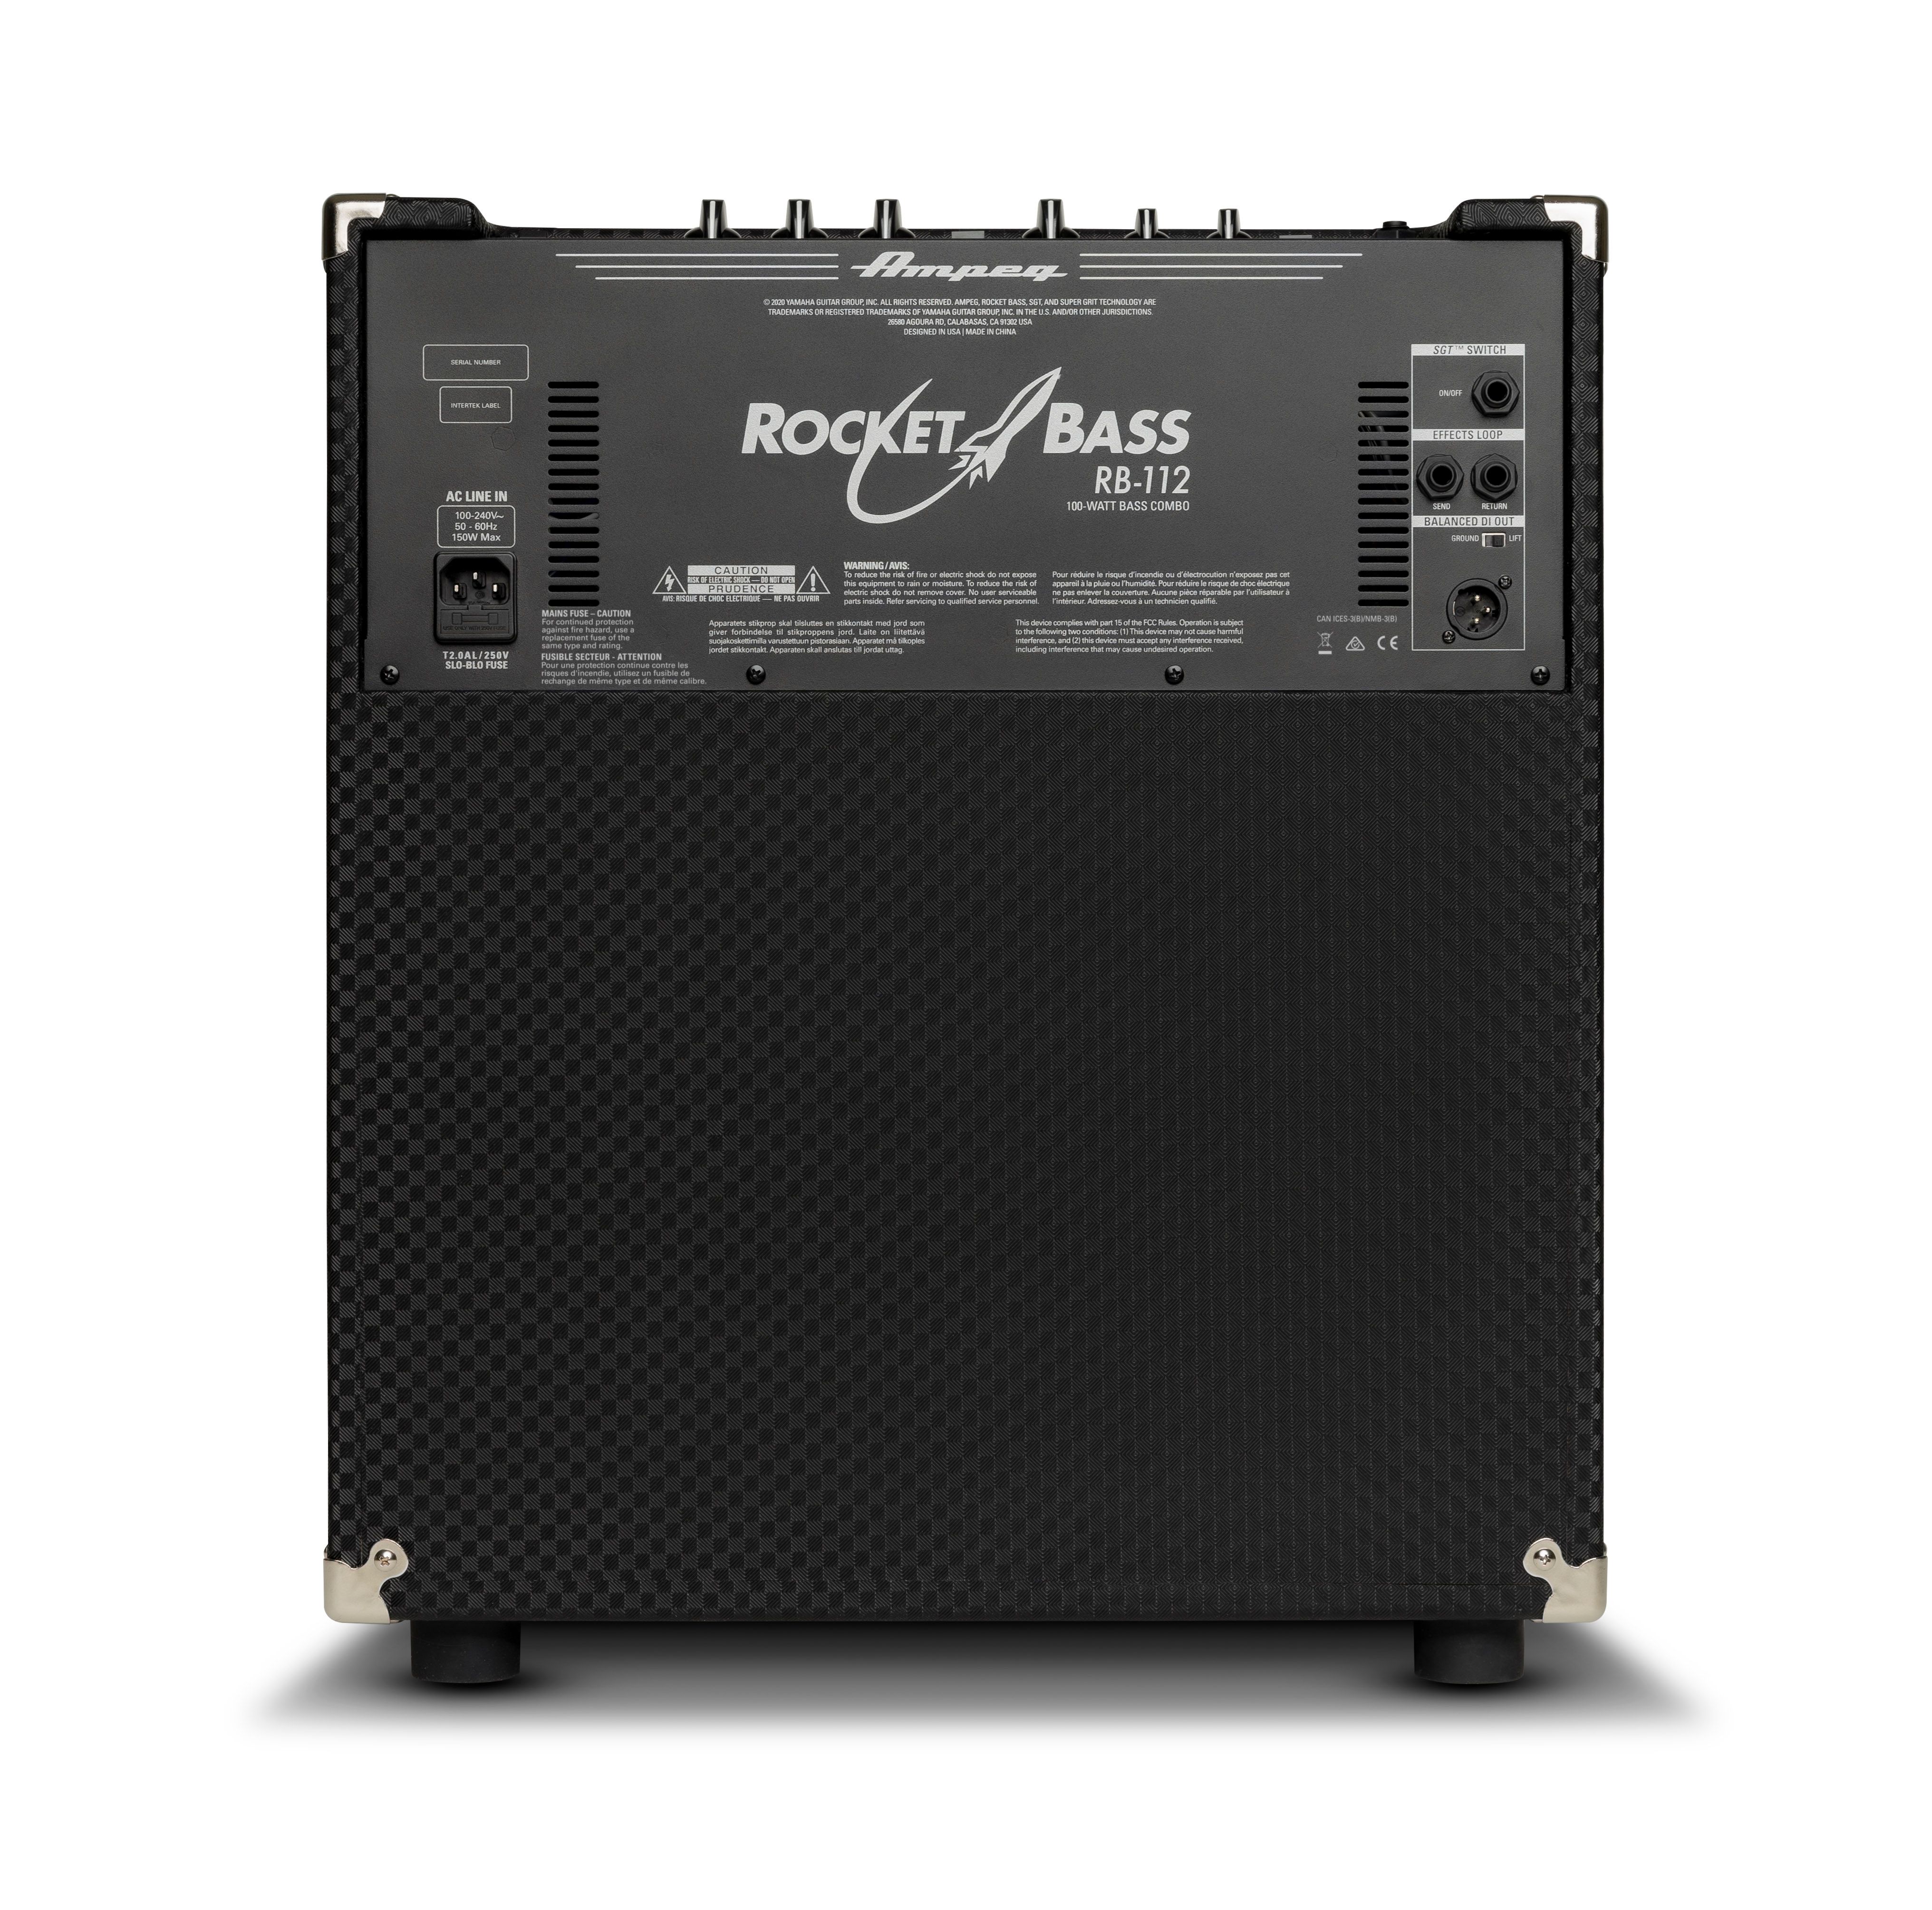 Ampeg Rocket Bass Combo 100w 1x12 - Combo amplificador para bajo - Variation 1